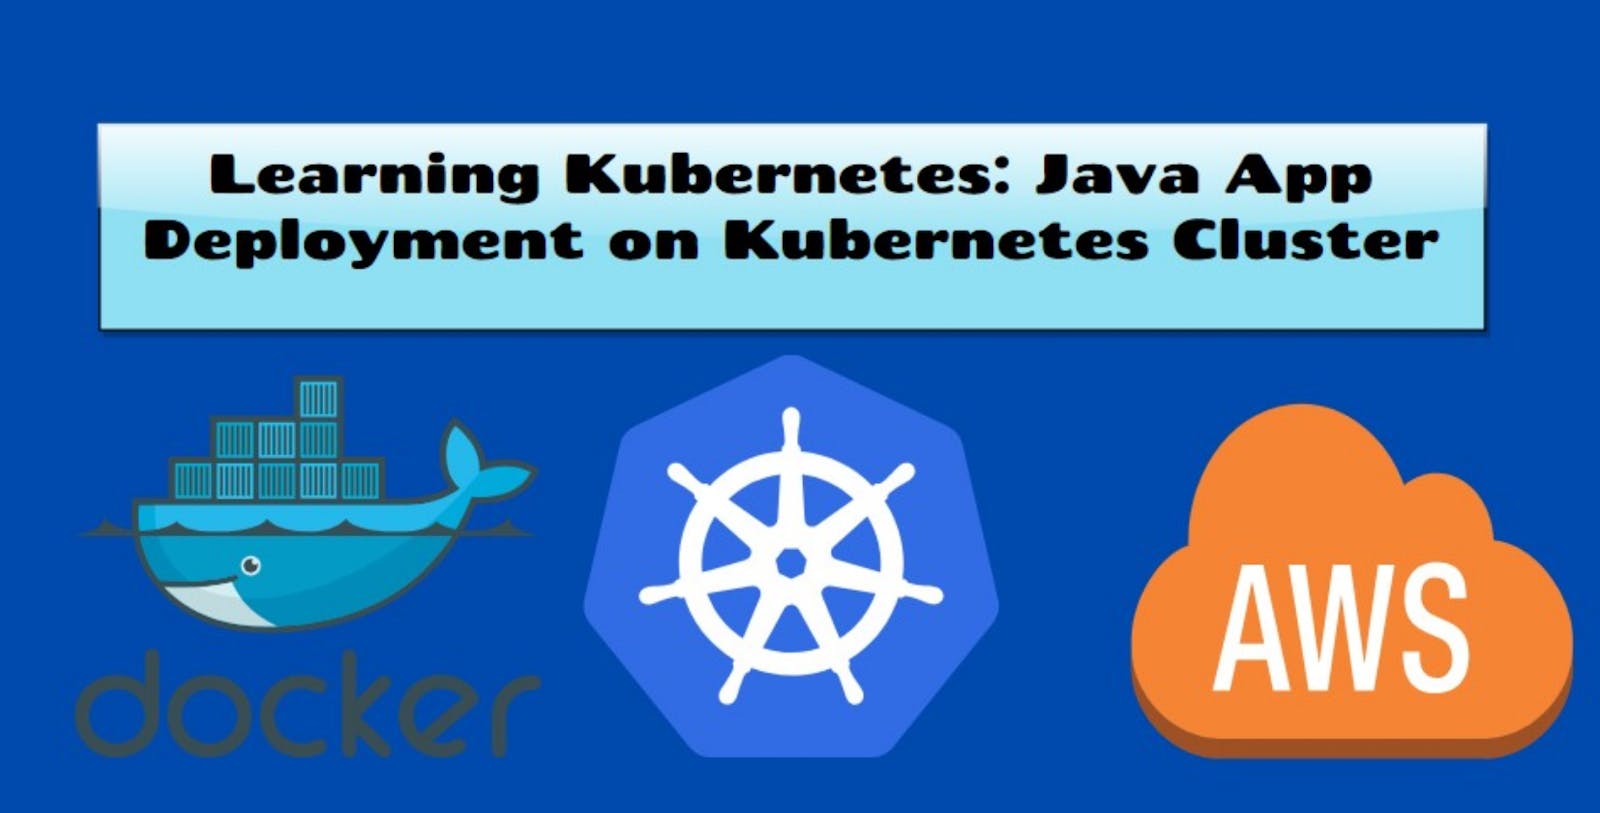 Learning Kubernetes: Java App Deployment on Kubernetes Cluster